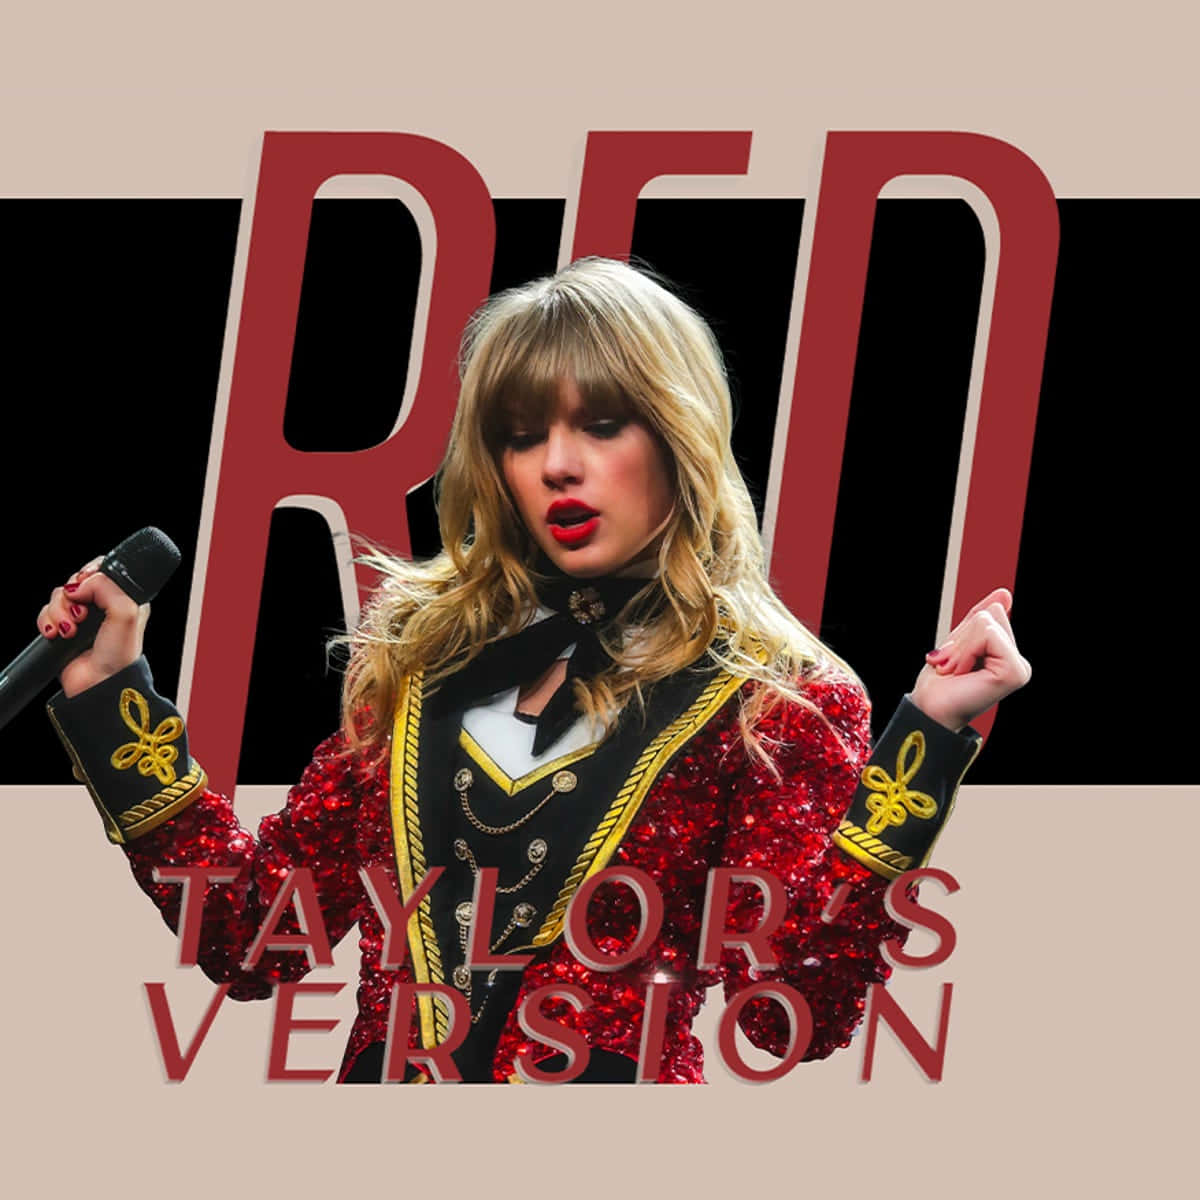 Ny musik fra Red Taylors version - frisk og unikt design Wallpaper